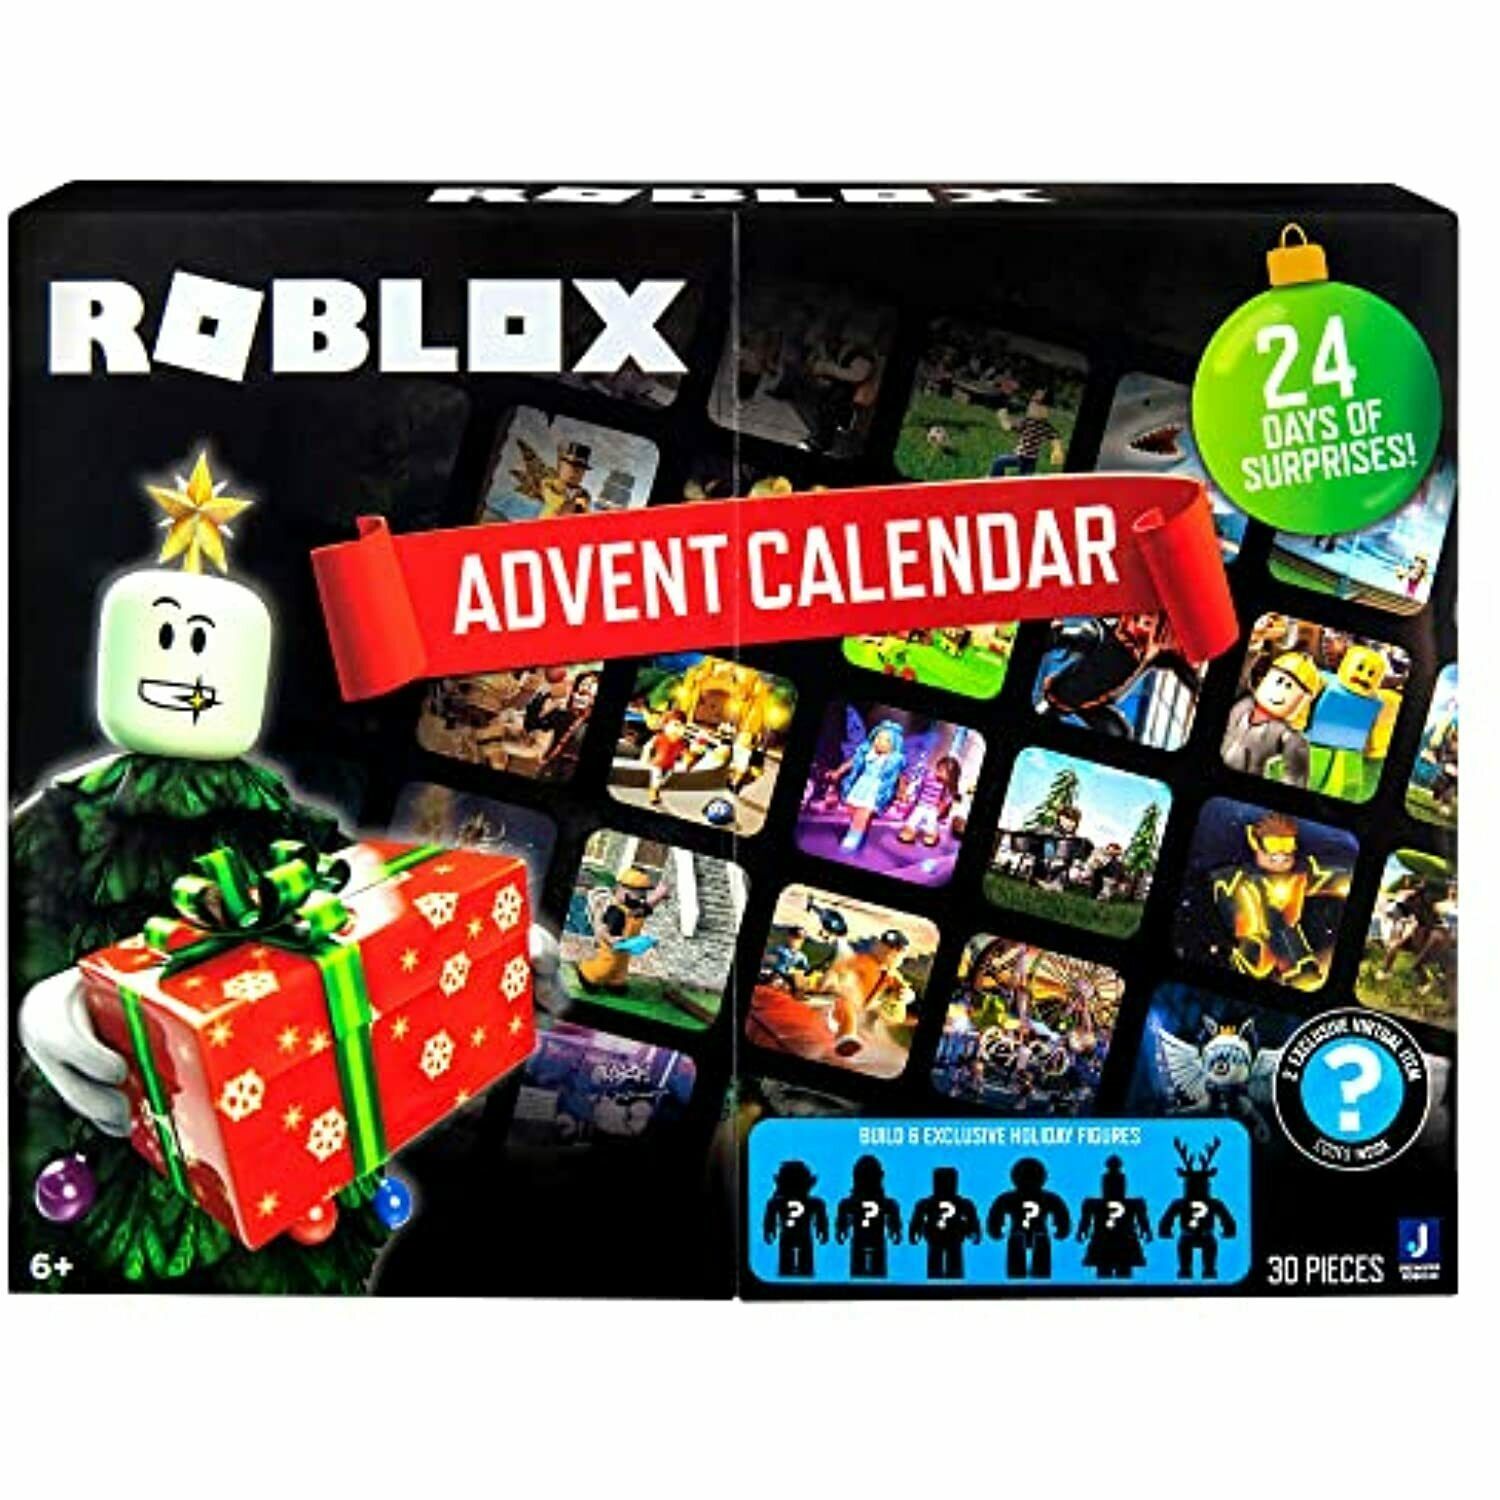 Roblox Action Collection Advent Calendar Includes 2 Exclusive Virtual